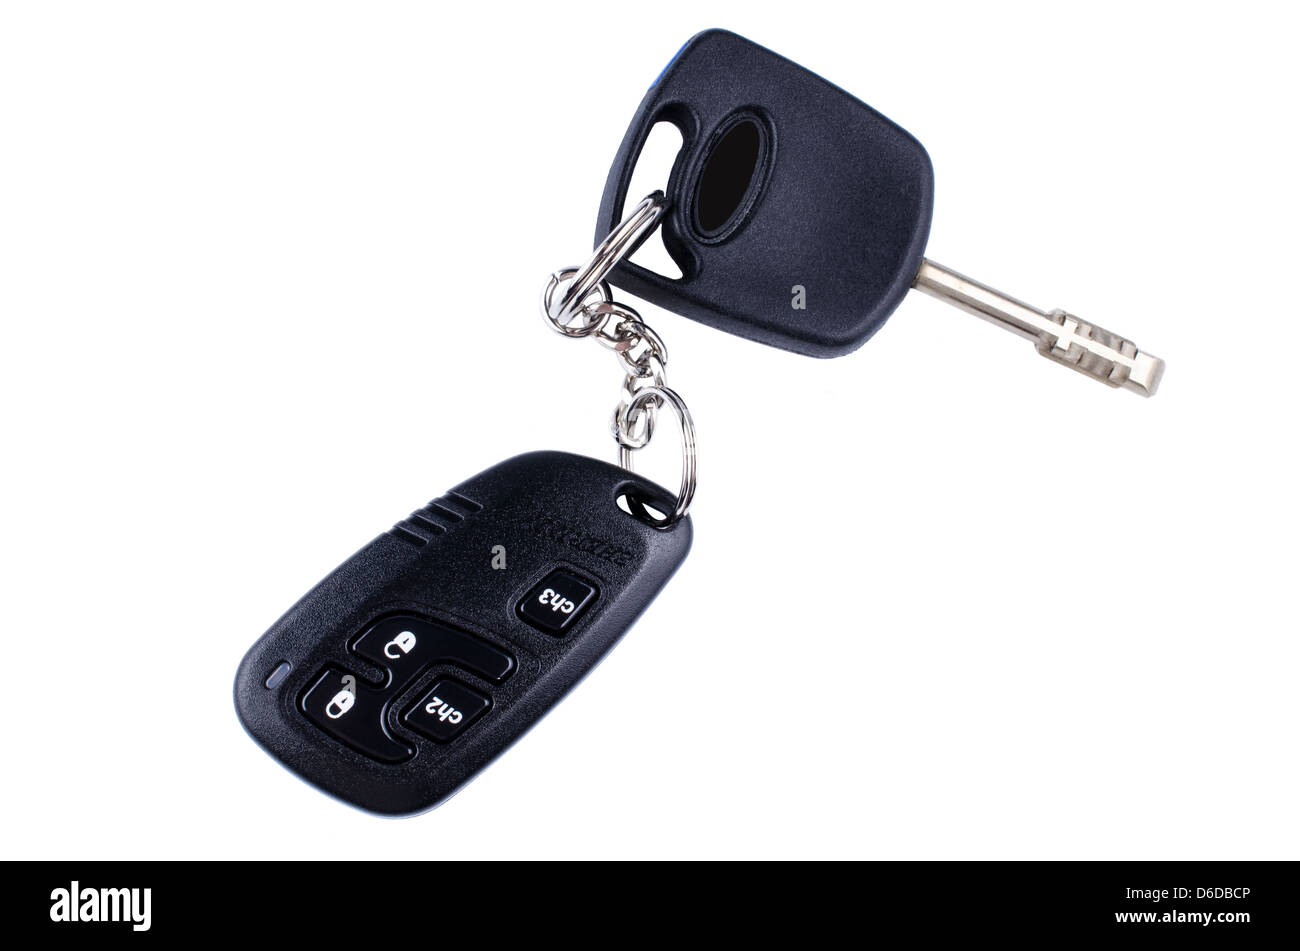 Remote car key isolated Stock Photo